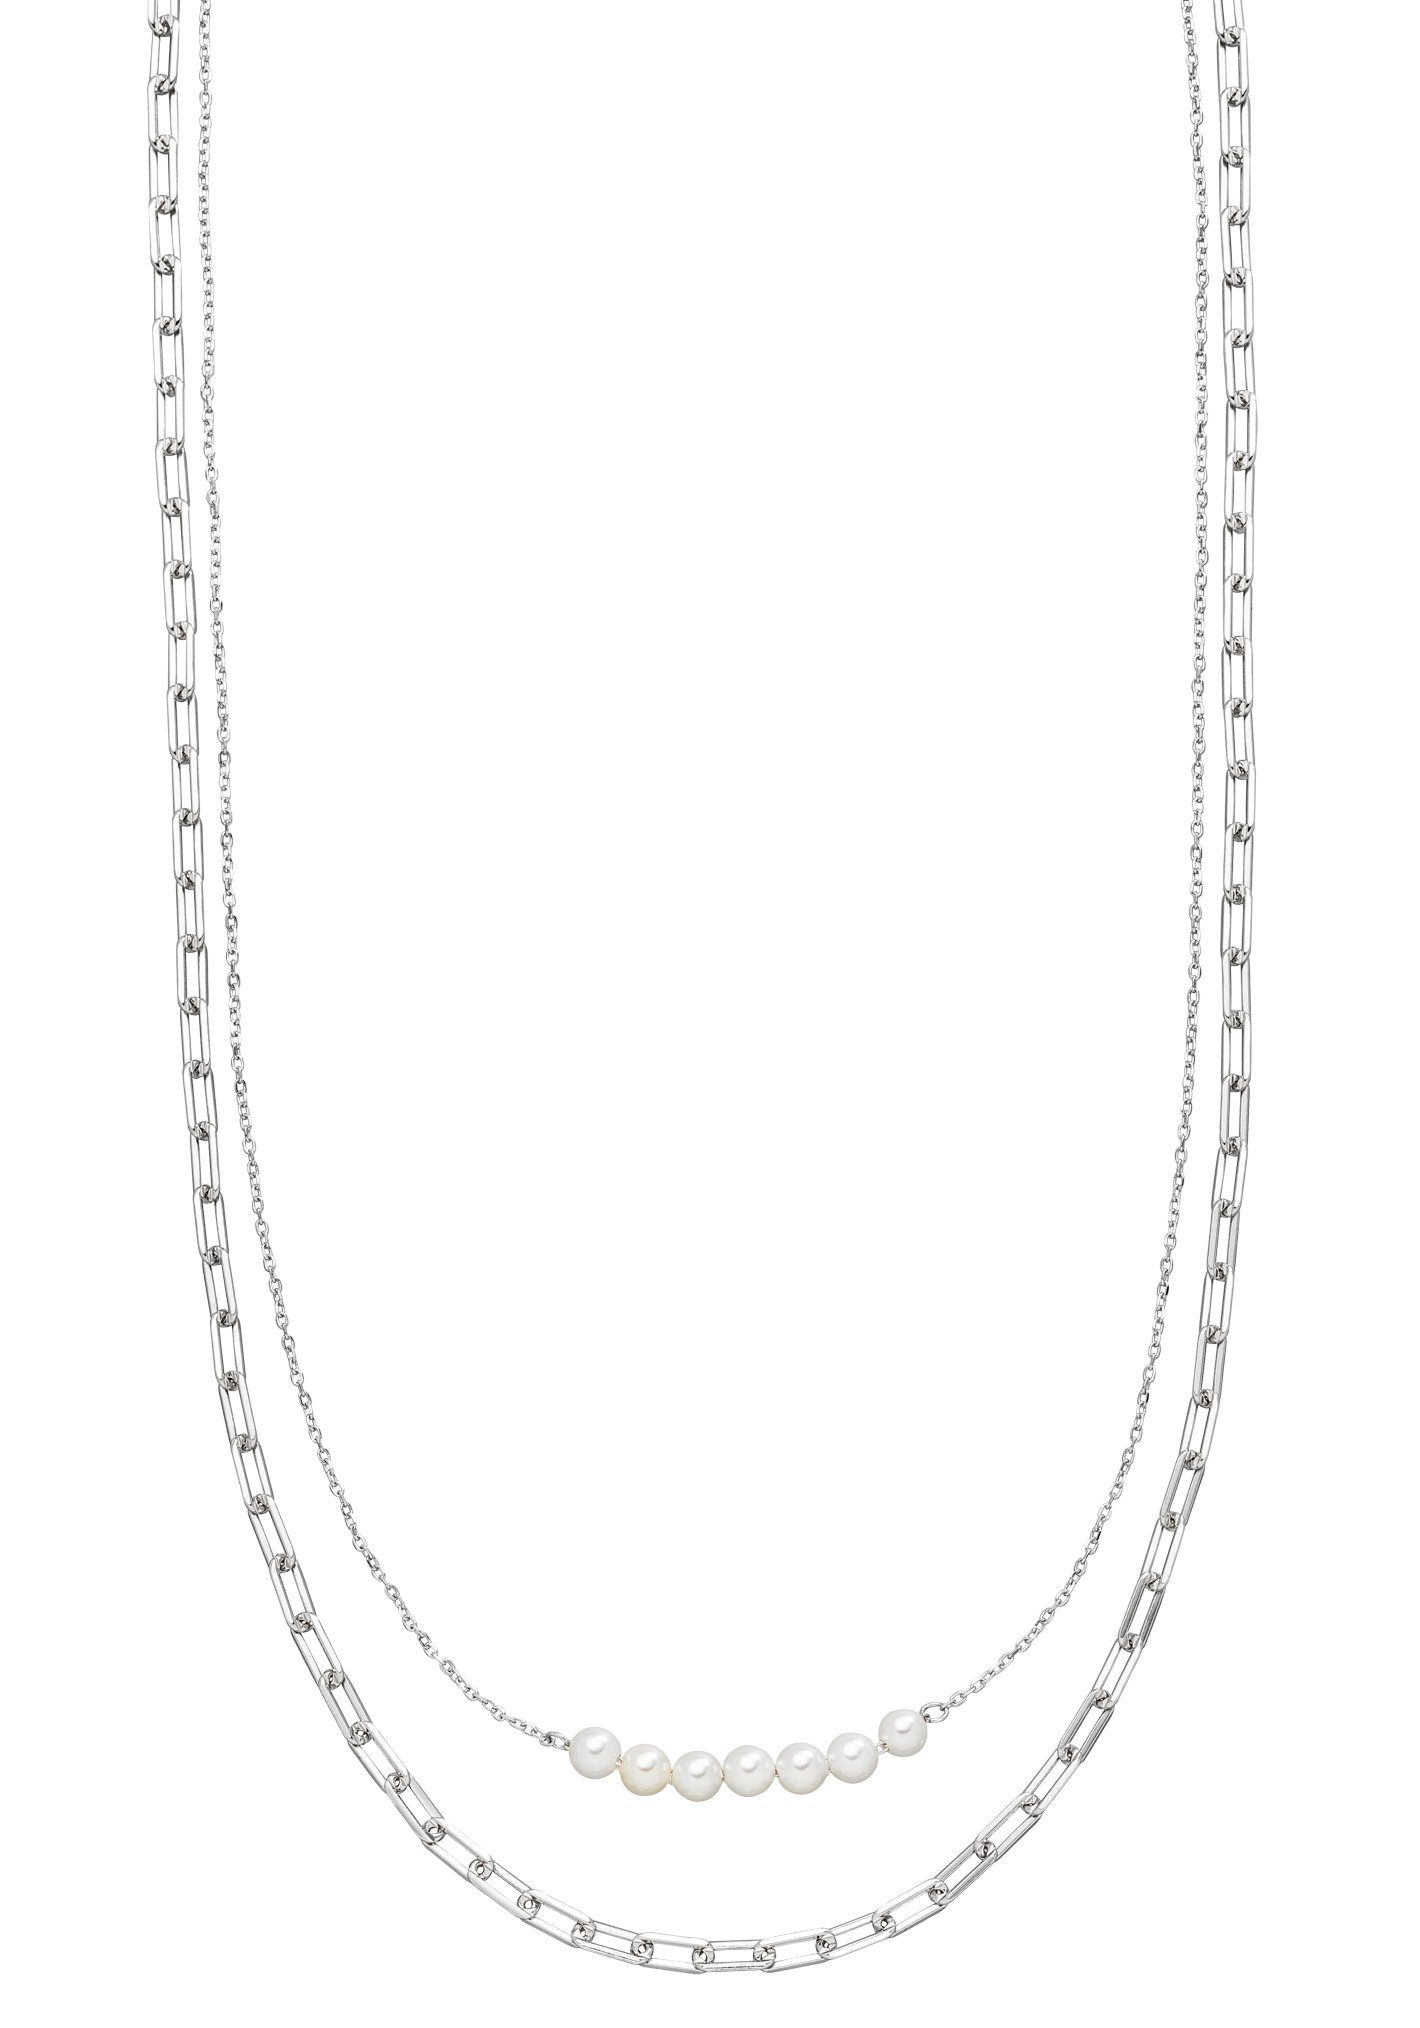 NANA KAY Silberkette Vivid Chains, ST1956, mit Muschelkernperle